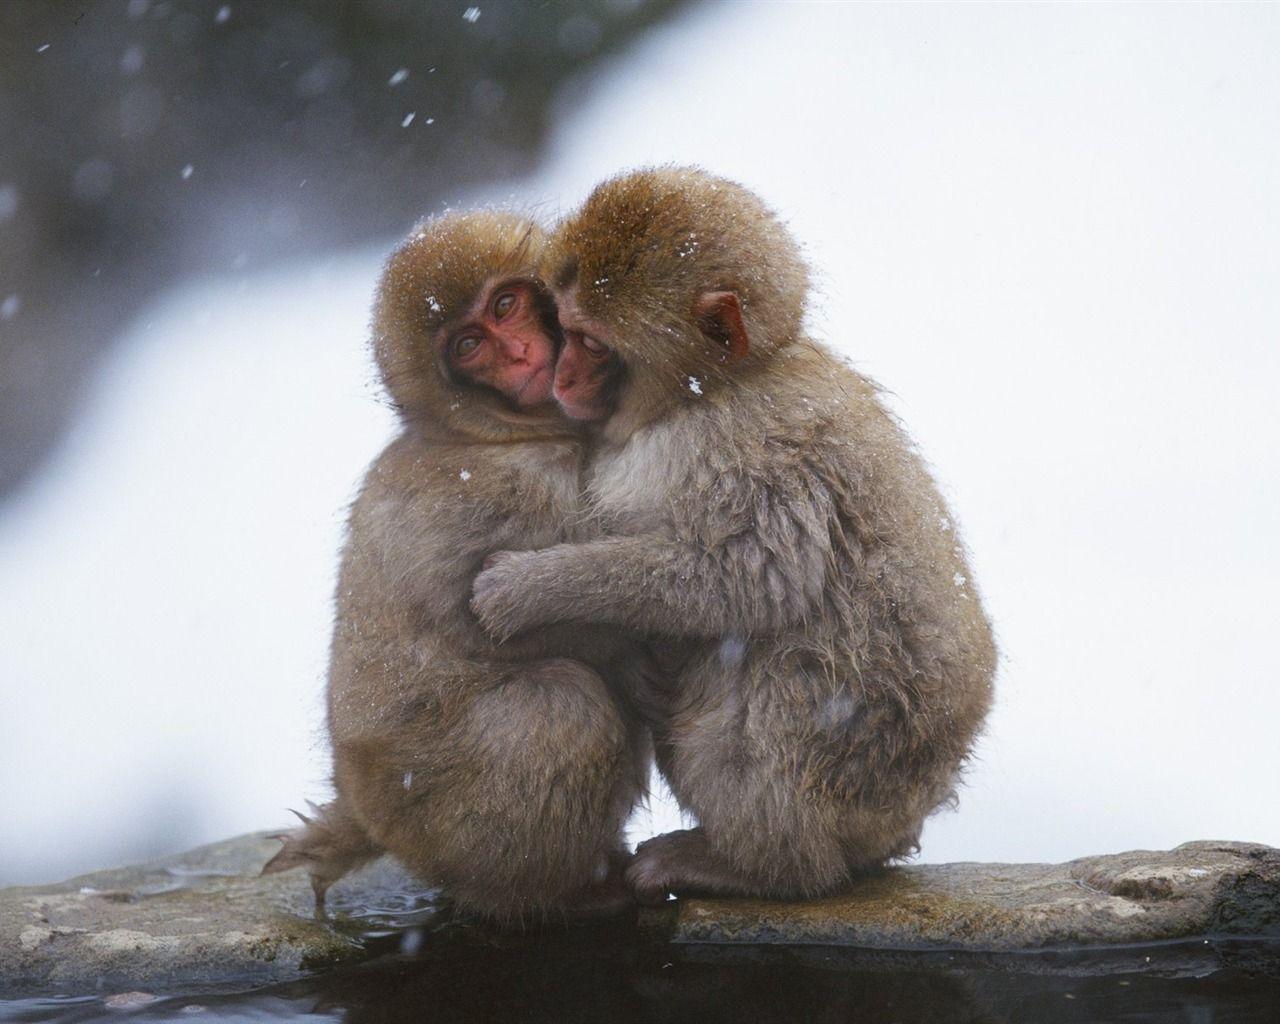 Snow hugged the monkey wallpaper wallpaper download